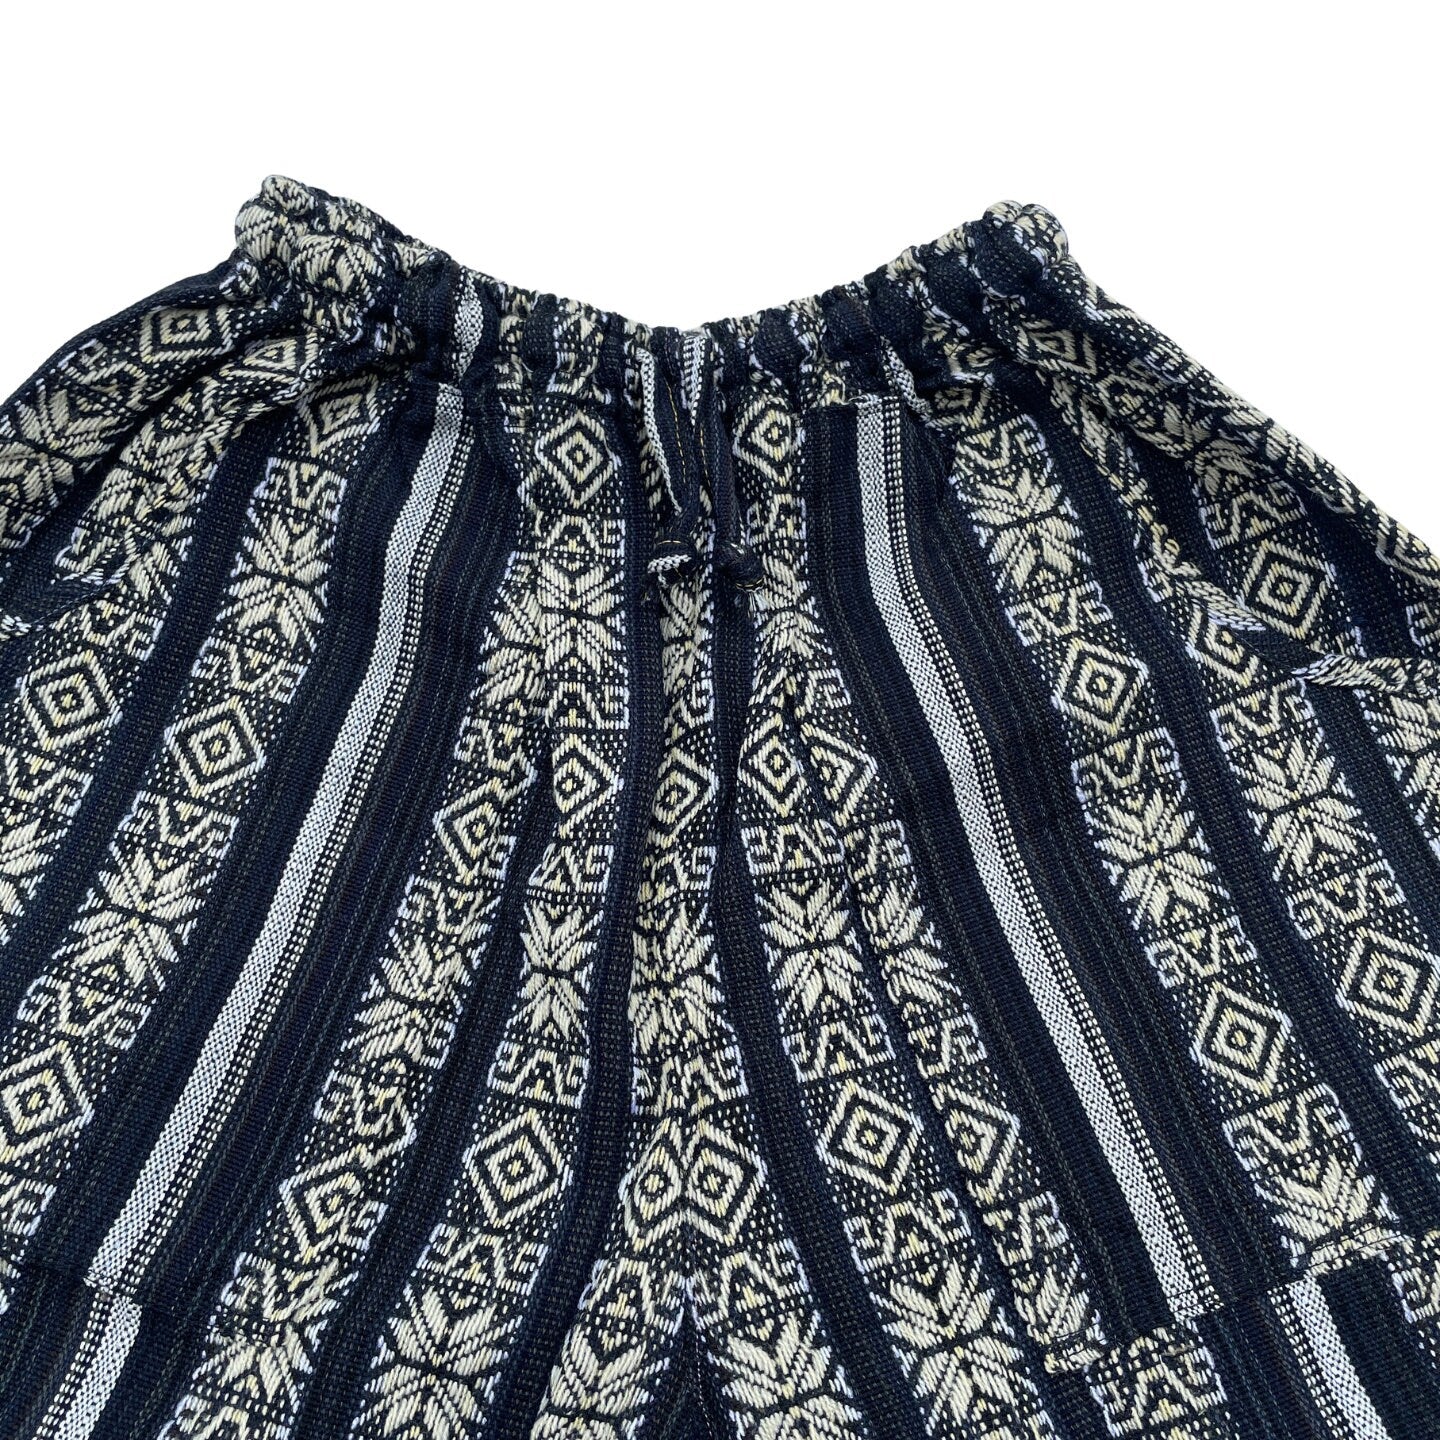 Unisex Woven Boho Cargo Shorts Size L | Hippie Shorts | Tribal Shorts |Black Gold